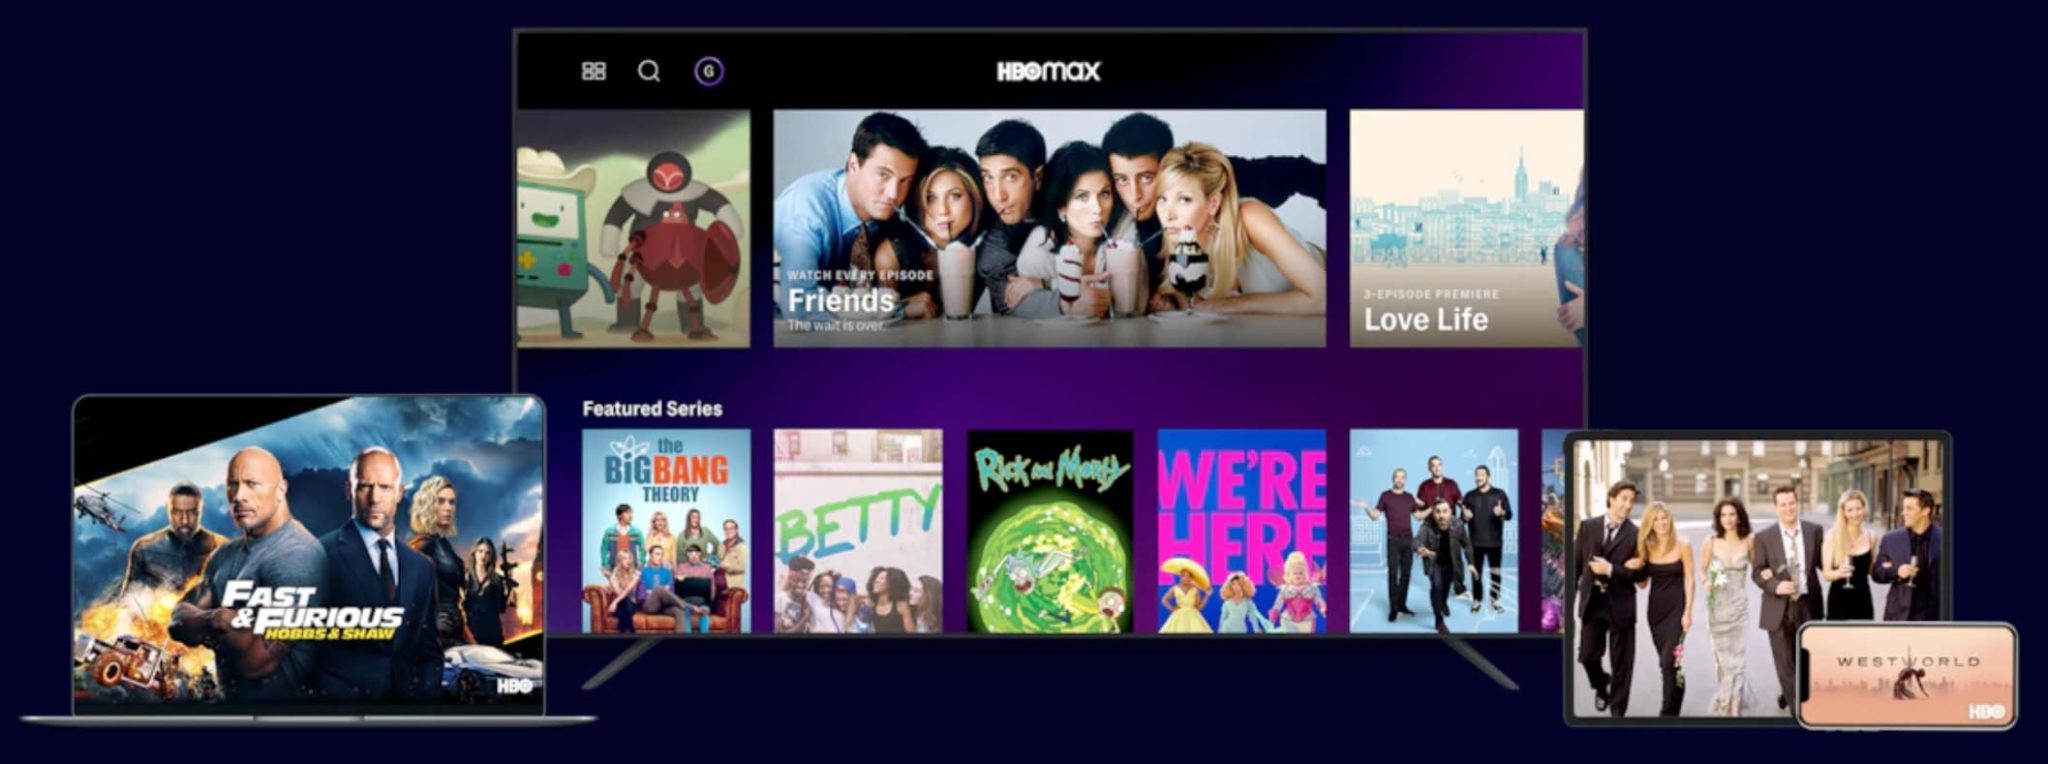 HBO Max screenshot showing program offerings